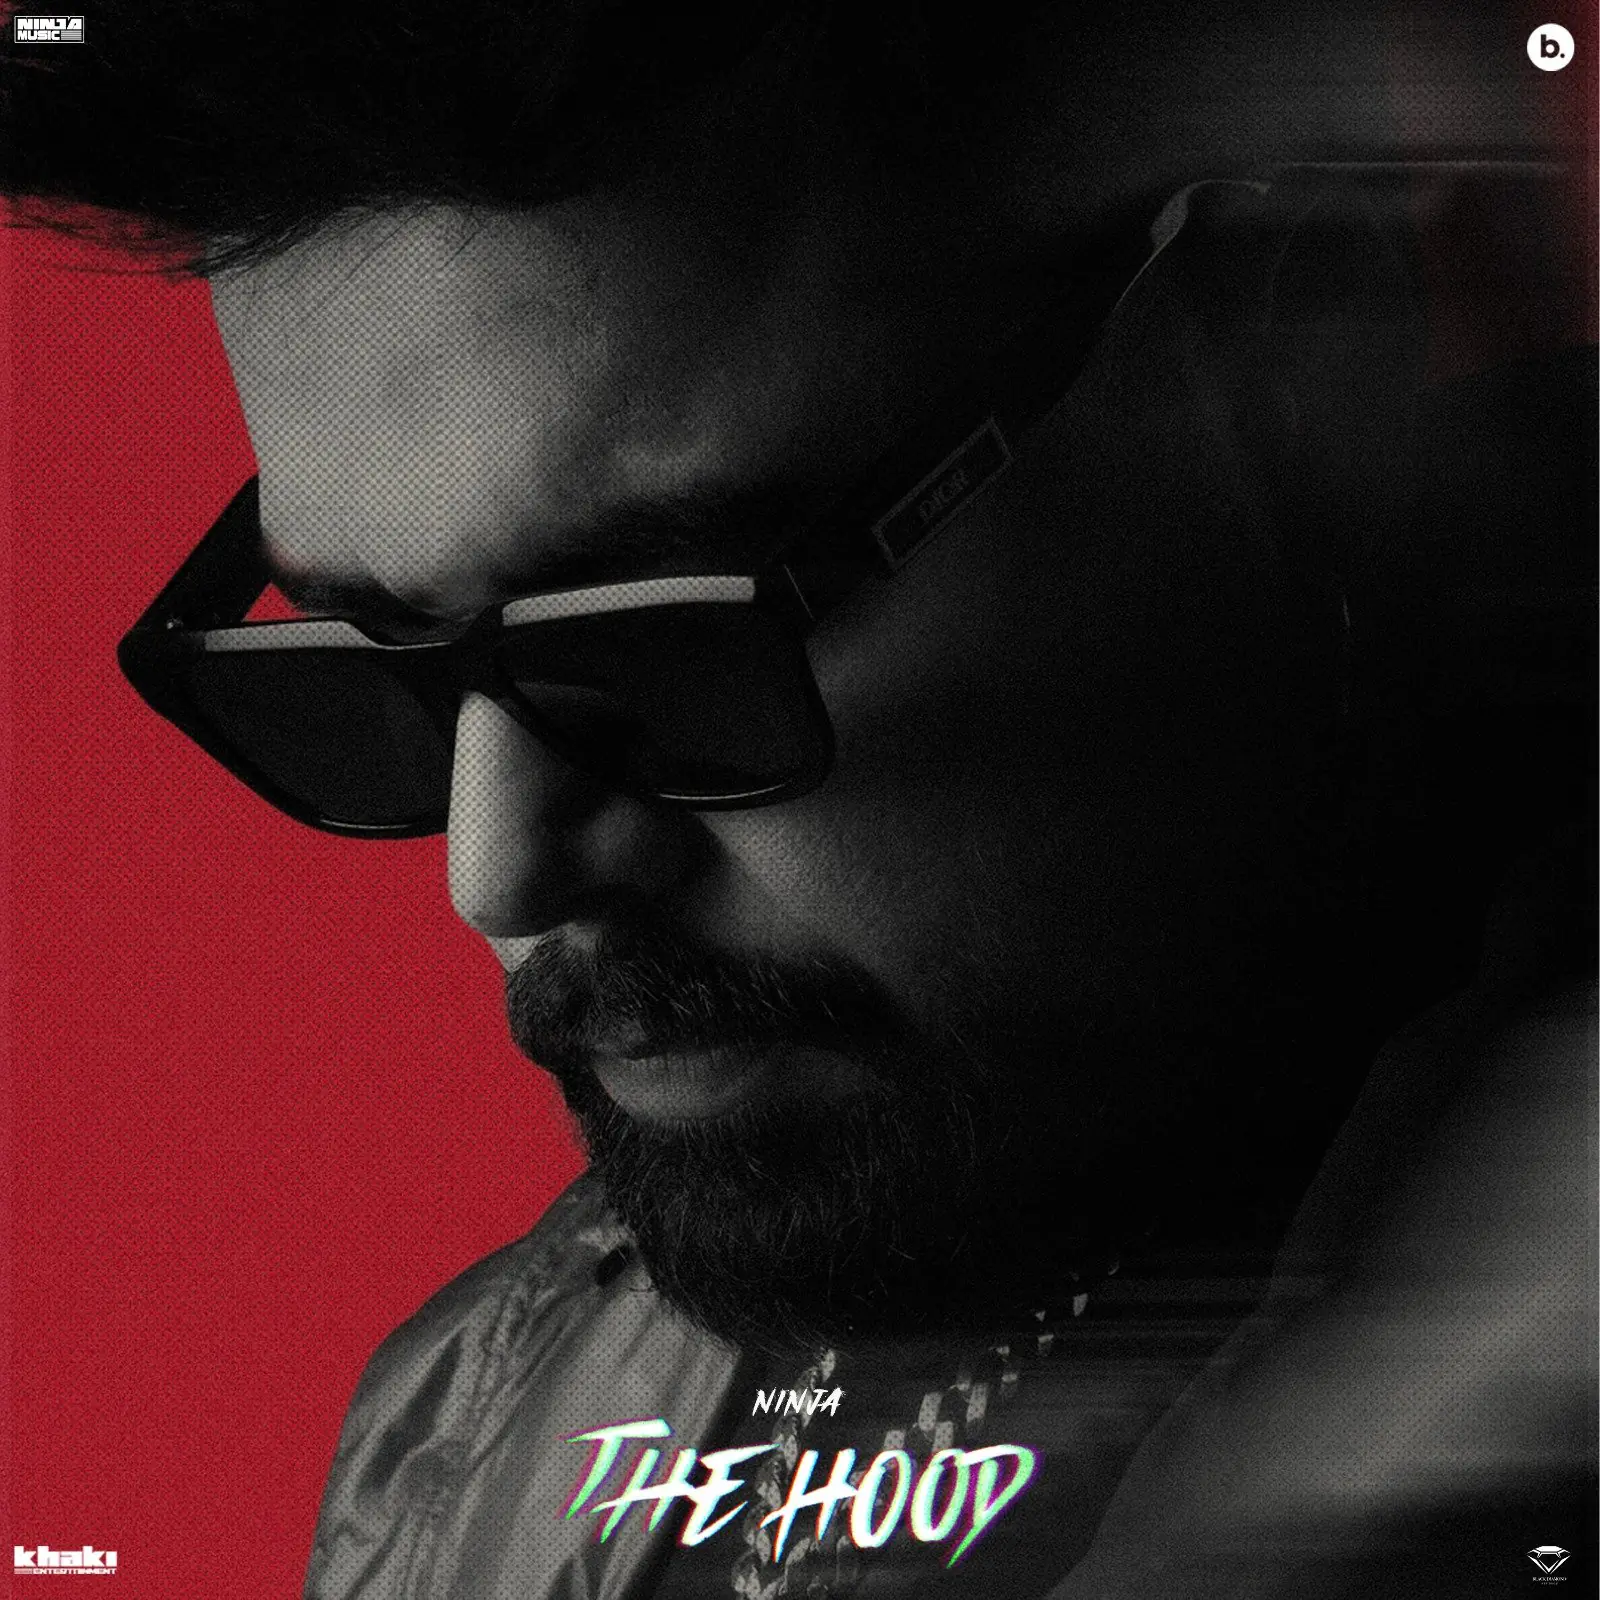 Punjabi Artist Ninja Drops Highly Anticipated Album ‘The Hood’